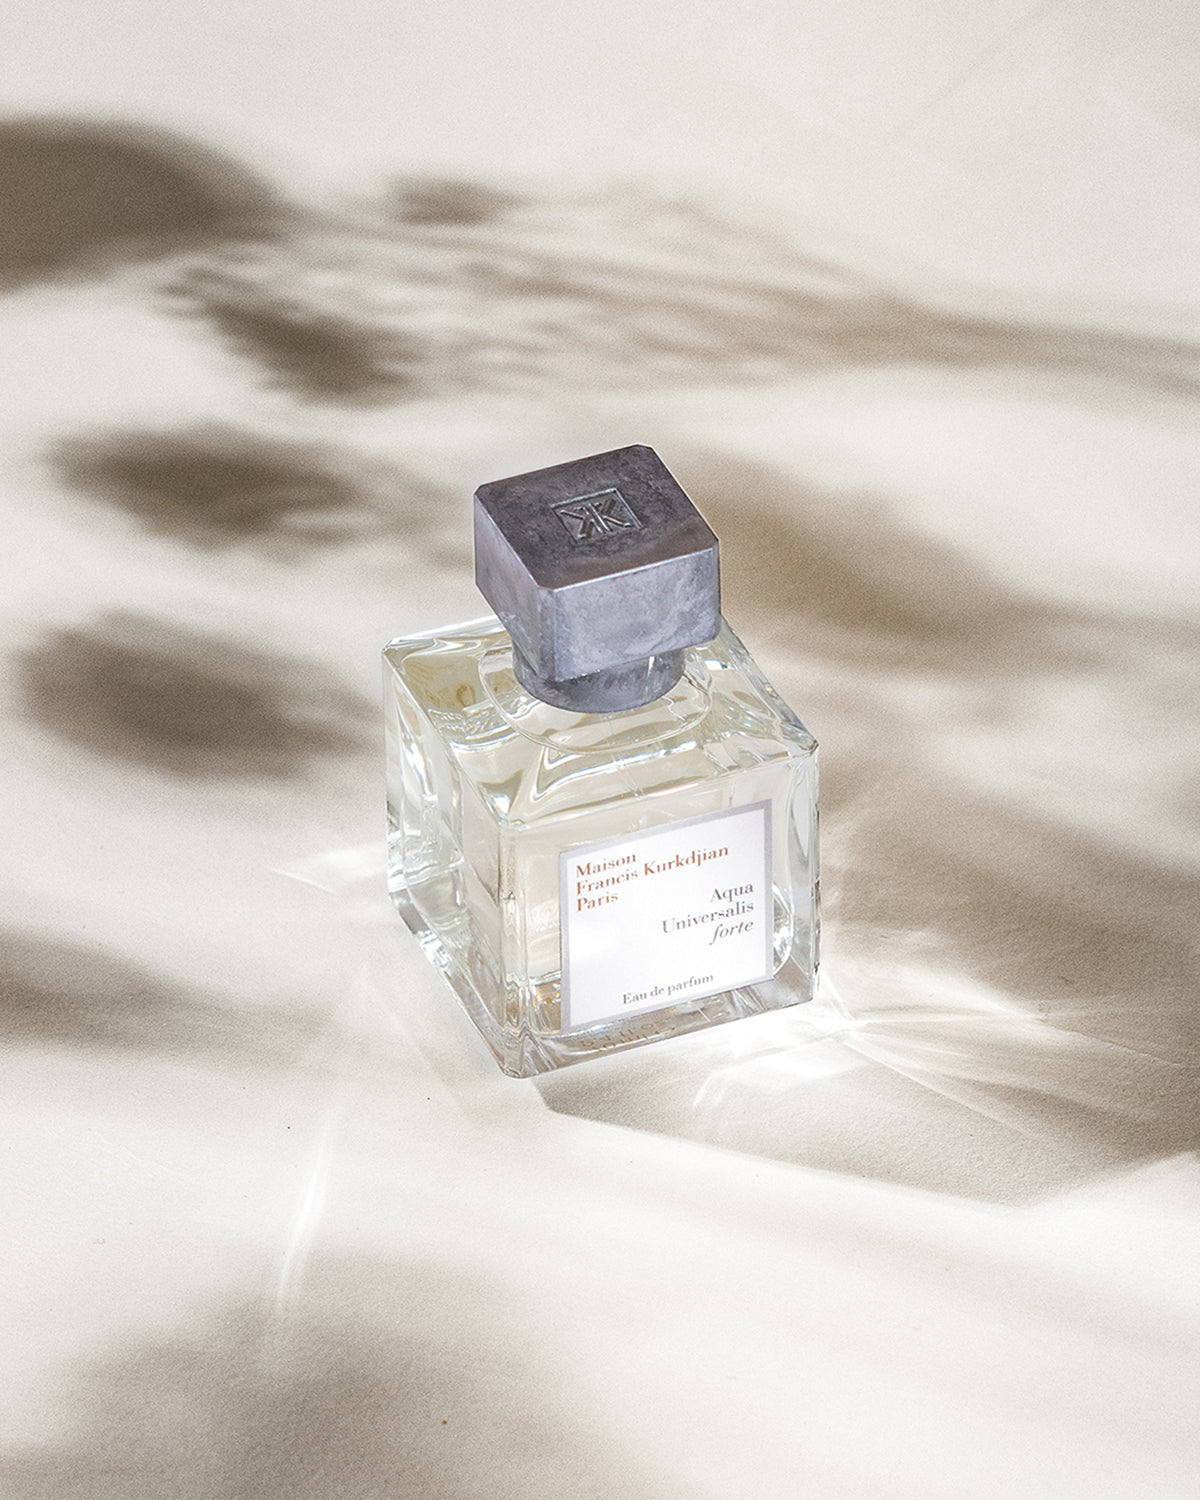 Maison Francis Kurkdjian Paris Aqua Universalis Forte Eau de Parfum (70 ml) #10073020